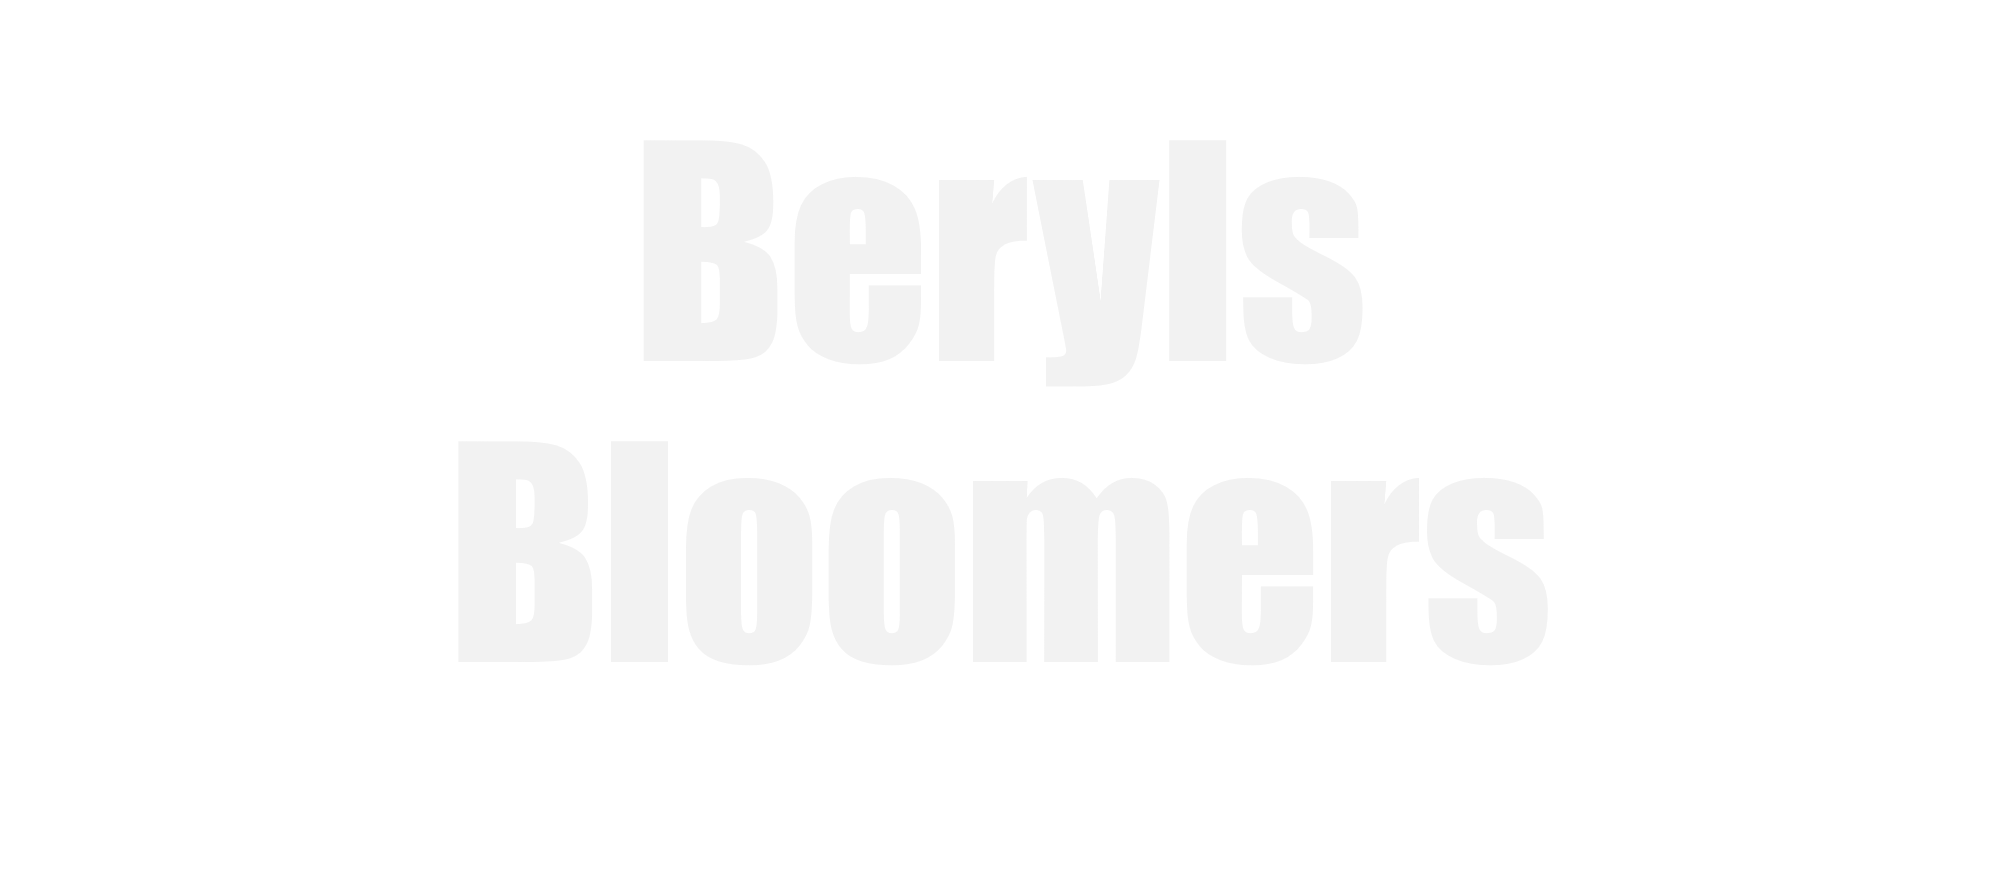 Beryl's Bloomers